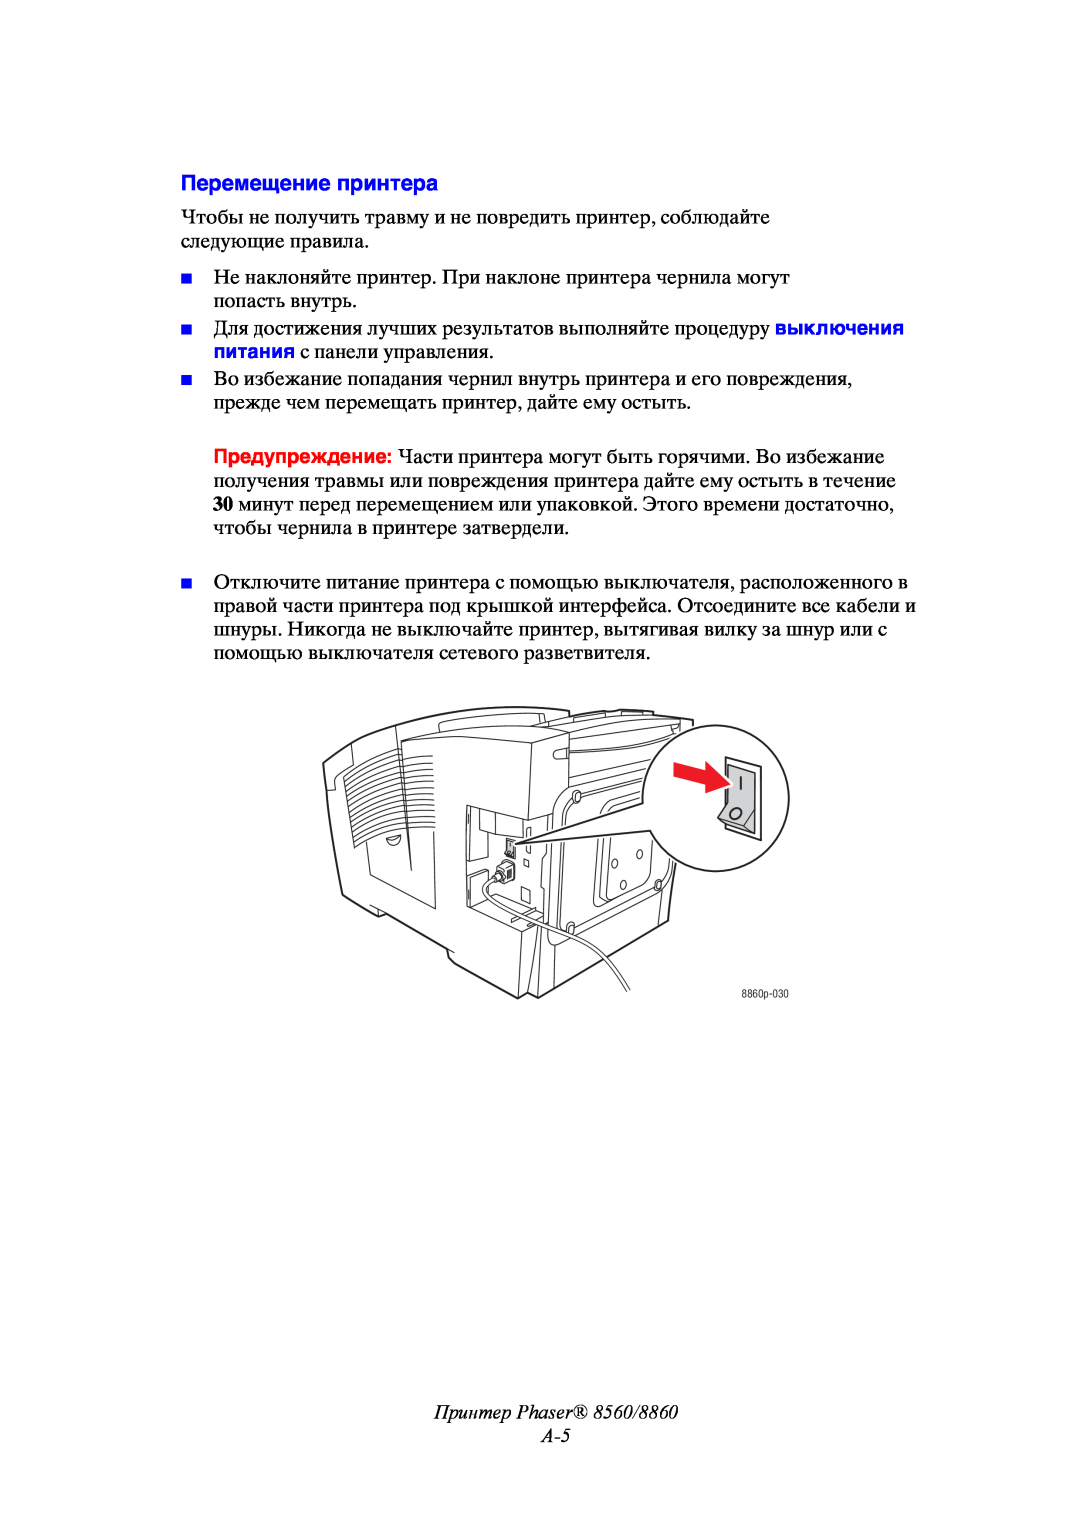 Xerox manual Перемещение принтера, Принтер Phaser 8560/8860 A-5 